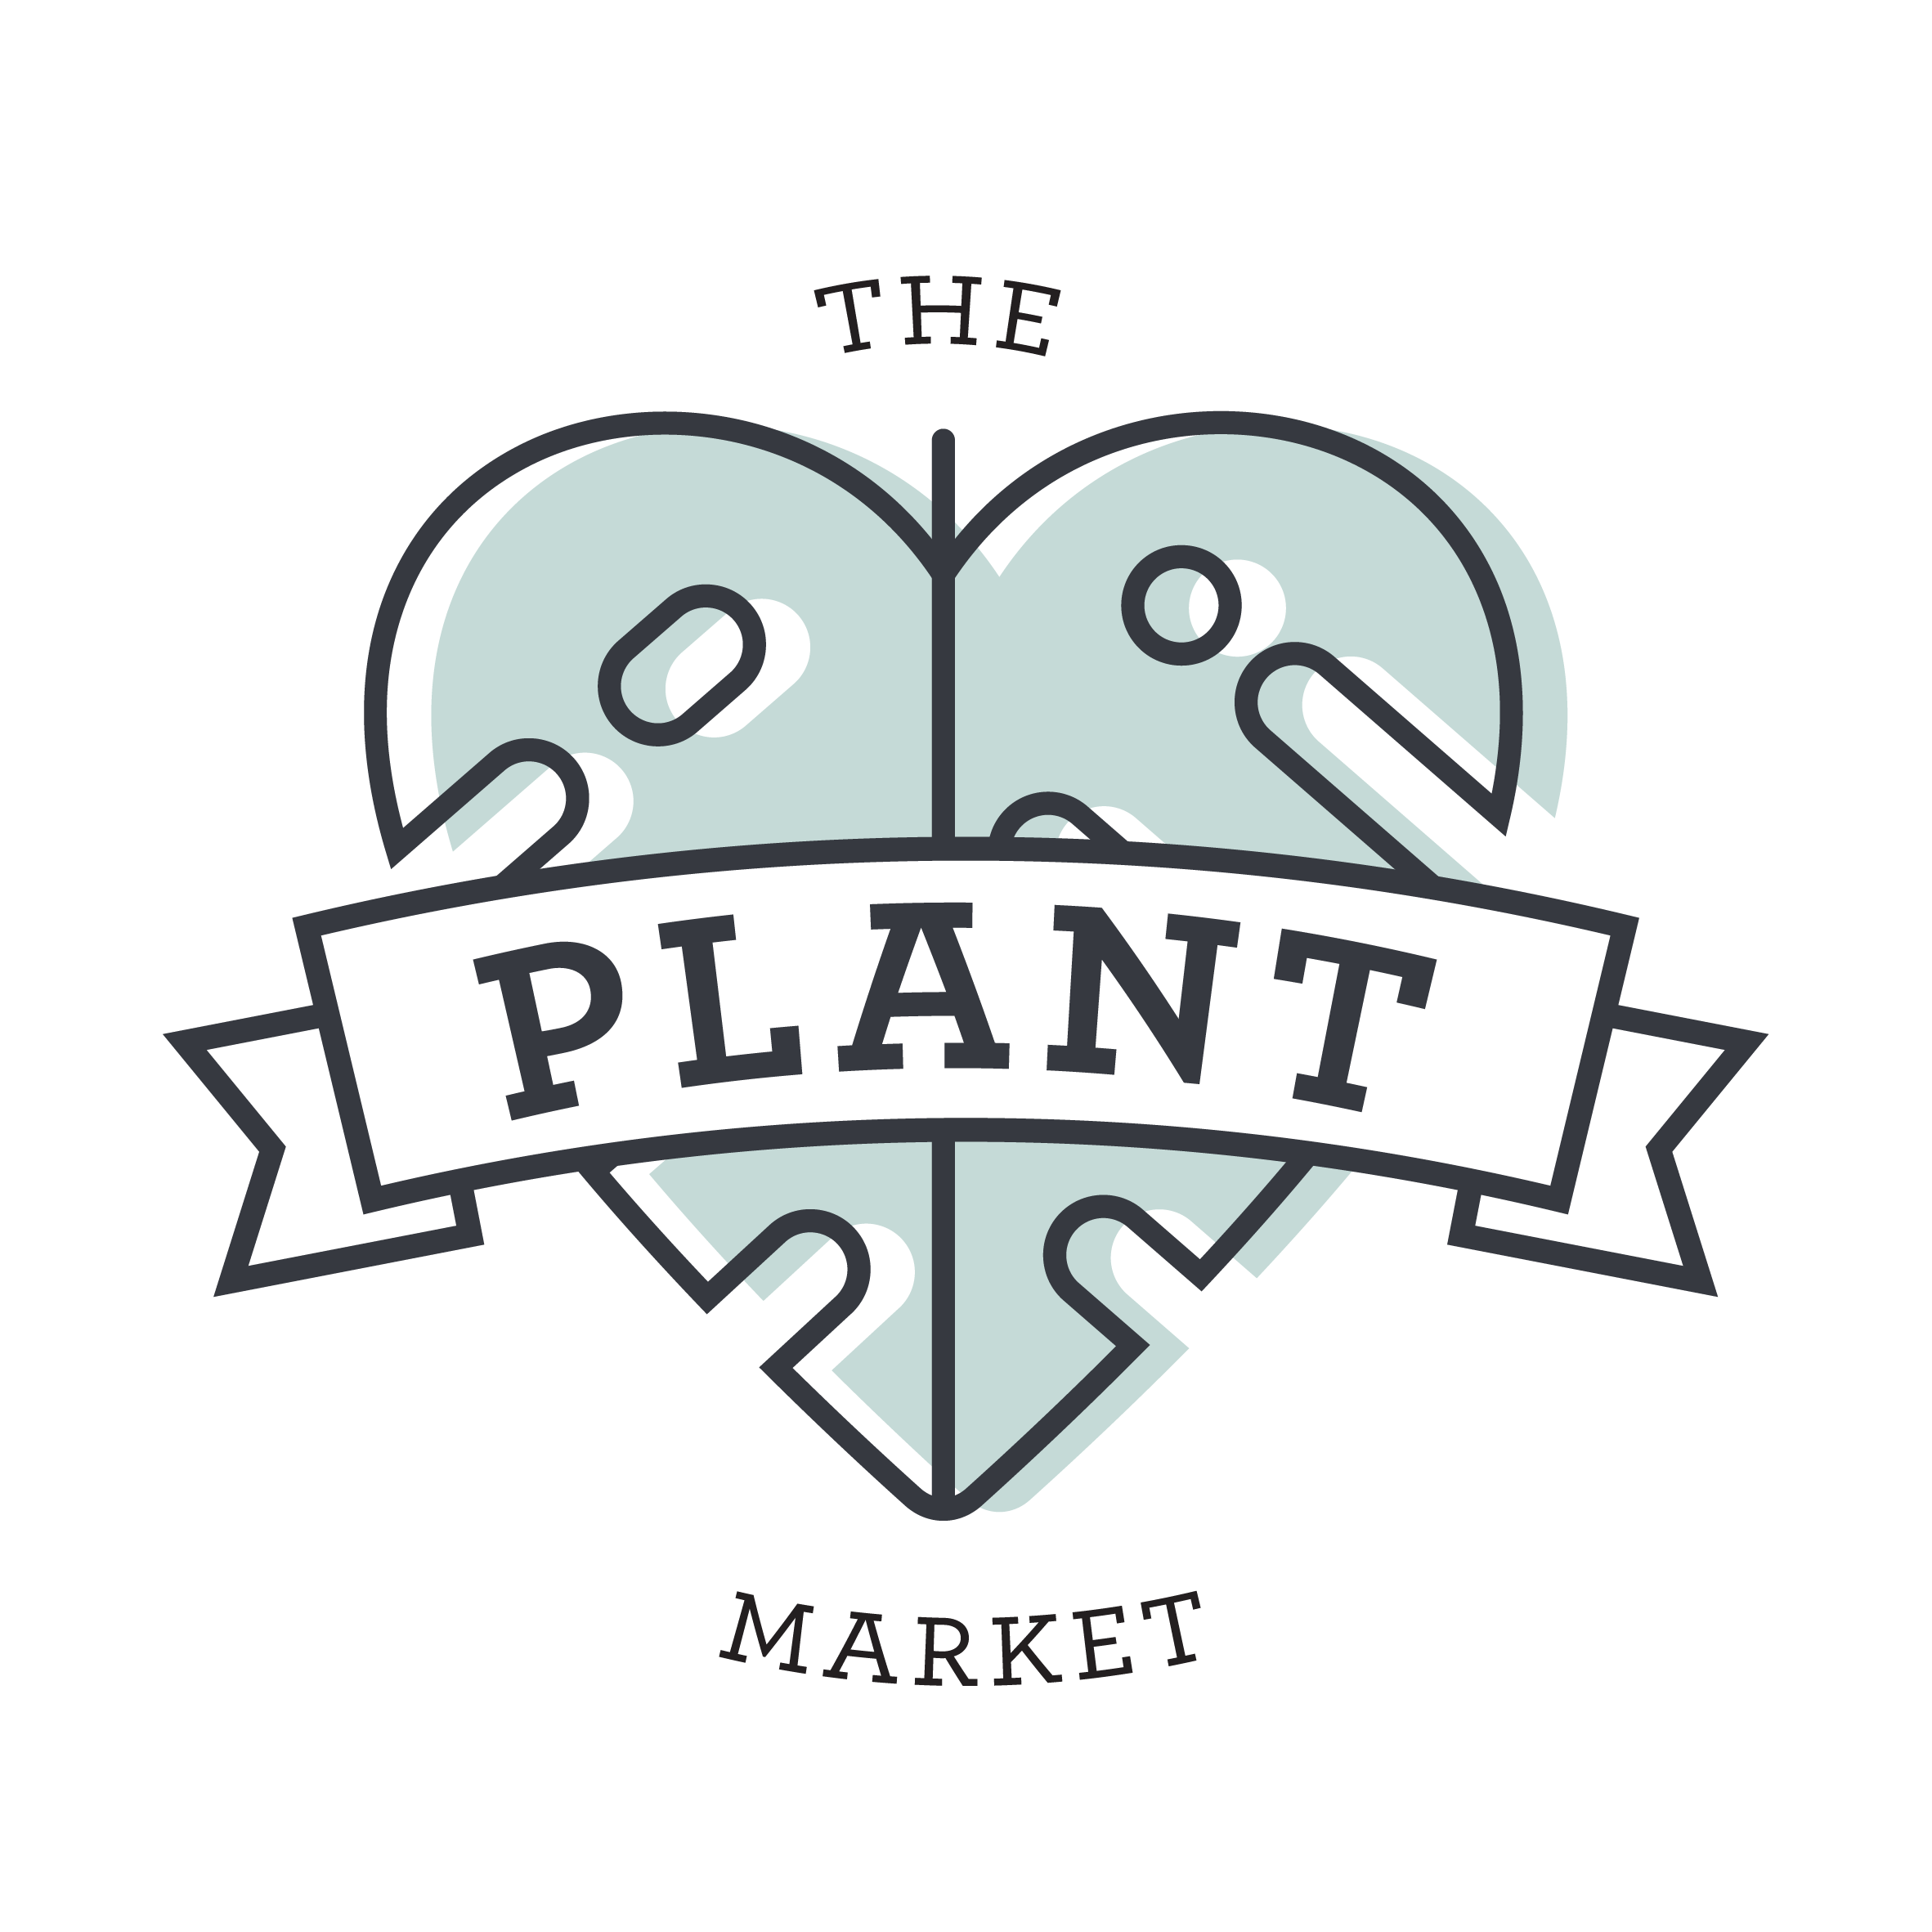 The Plant Market